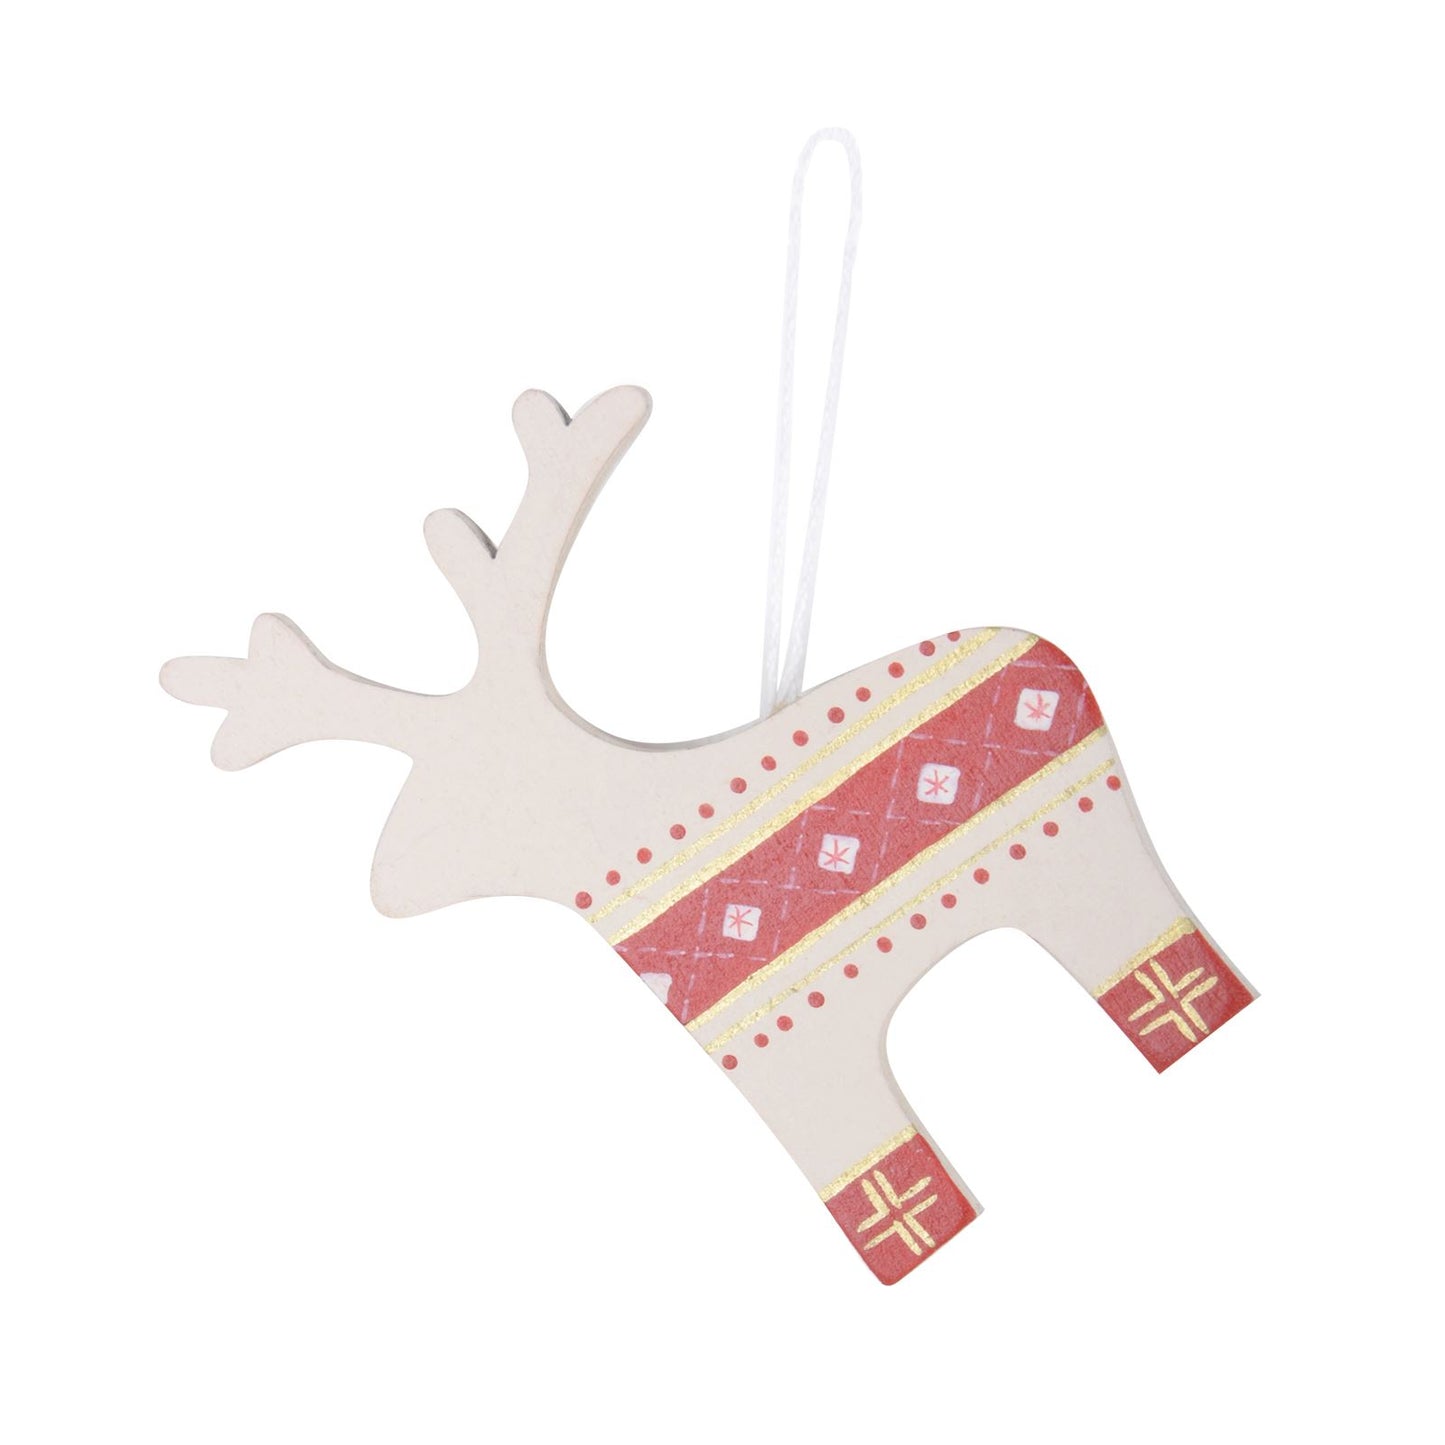 Mr Crimbo 6pk Red White Wooden Reindeer Tree Decorations - MrCrimbo.co.uk -XS4517 - -christmas tree decorations